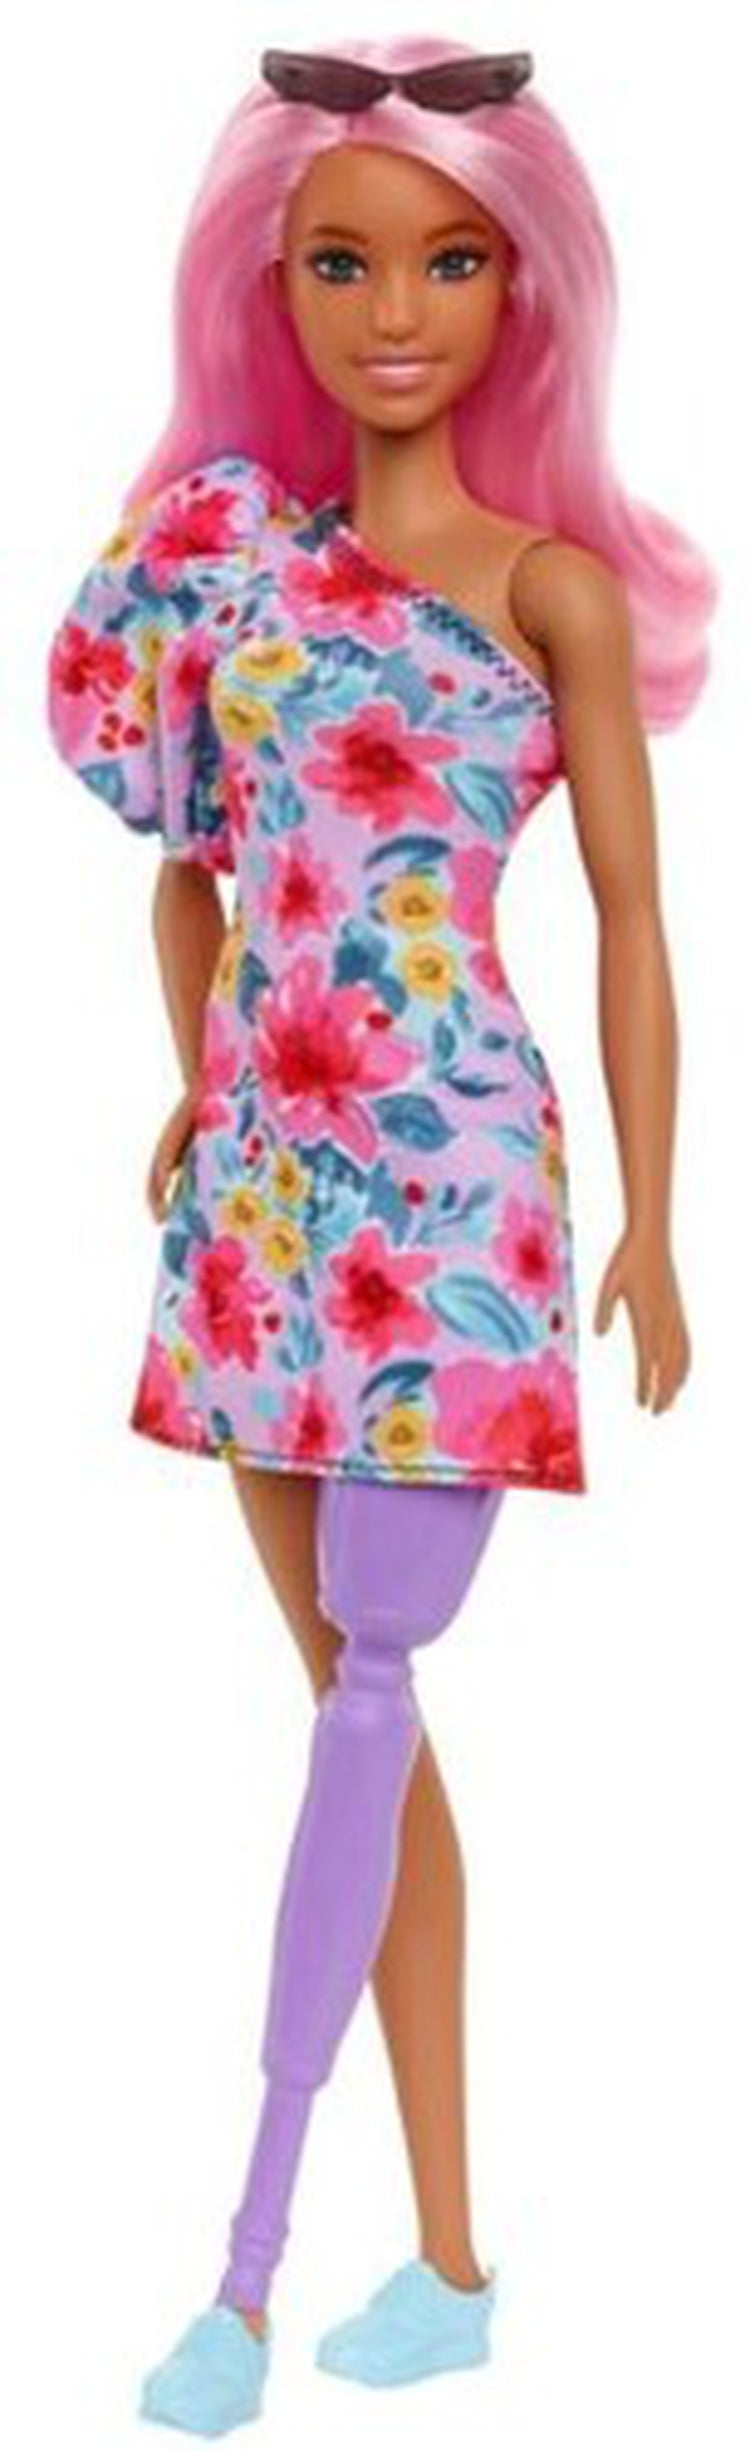 Mattel - Barbie Fashionista Doll, One Shoulder Floral Dress, Cat-Eye Sun Glasses, Blue Sneakers, Long Pink Wavey Hair and Purple Prosthetic Leg